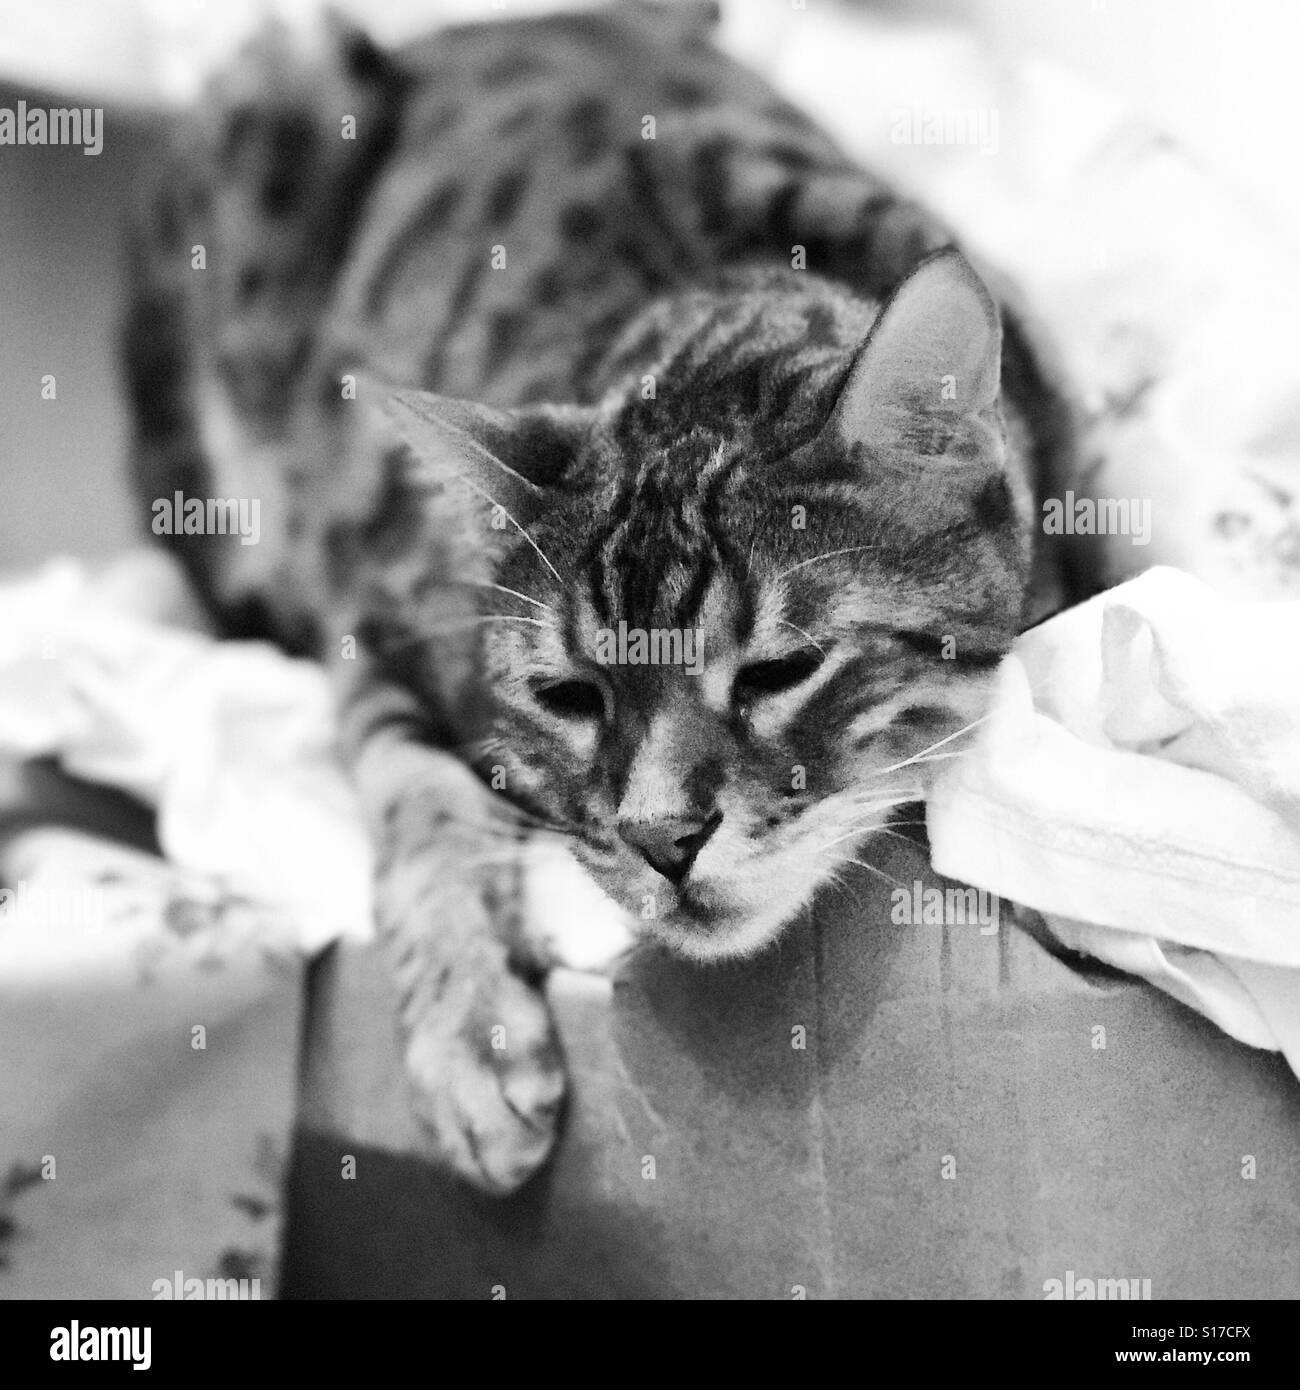 A pedigree Bengal cat asleep on a pile of washing. Stock Photo